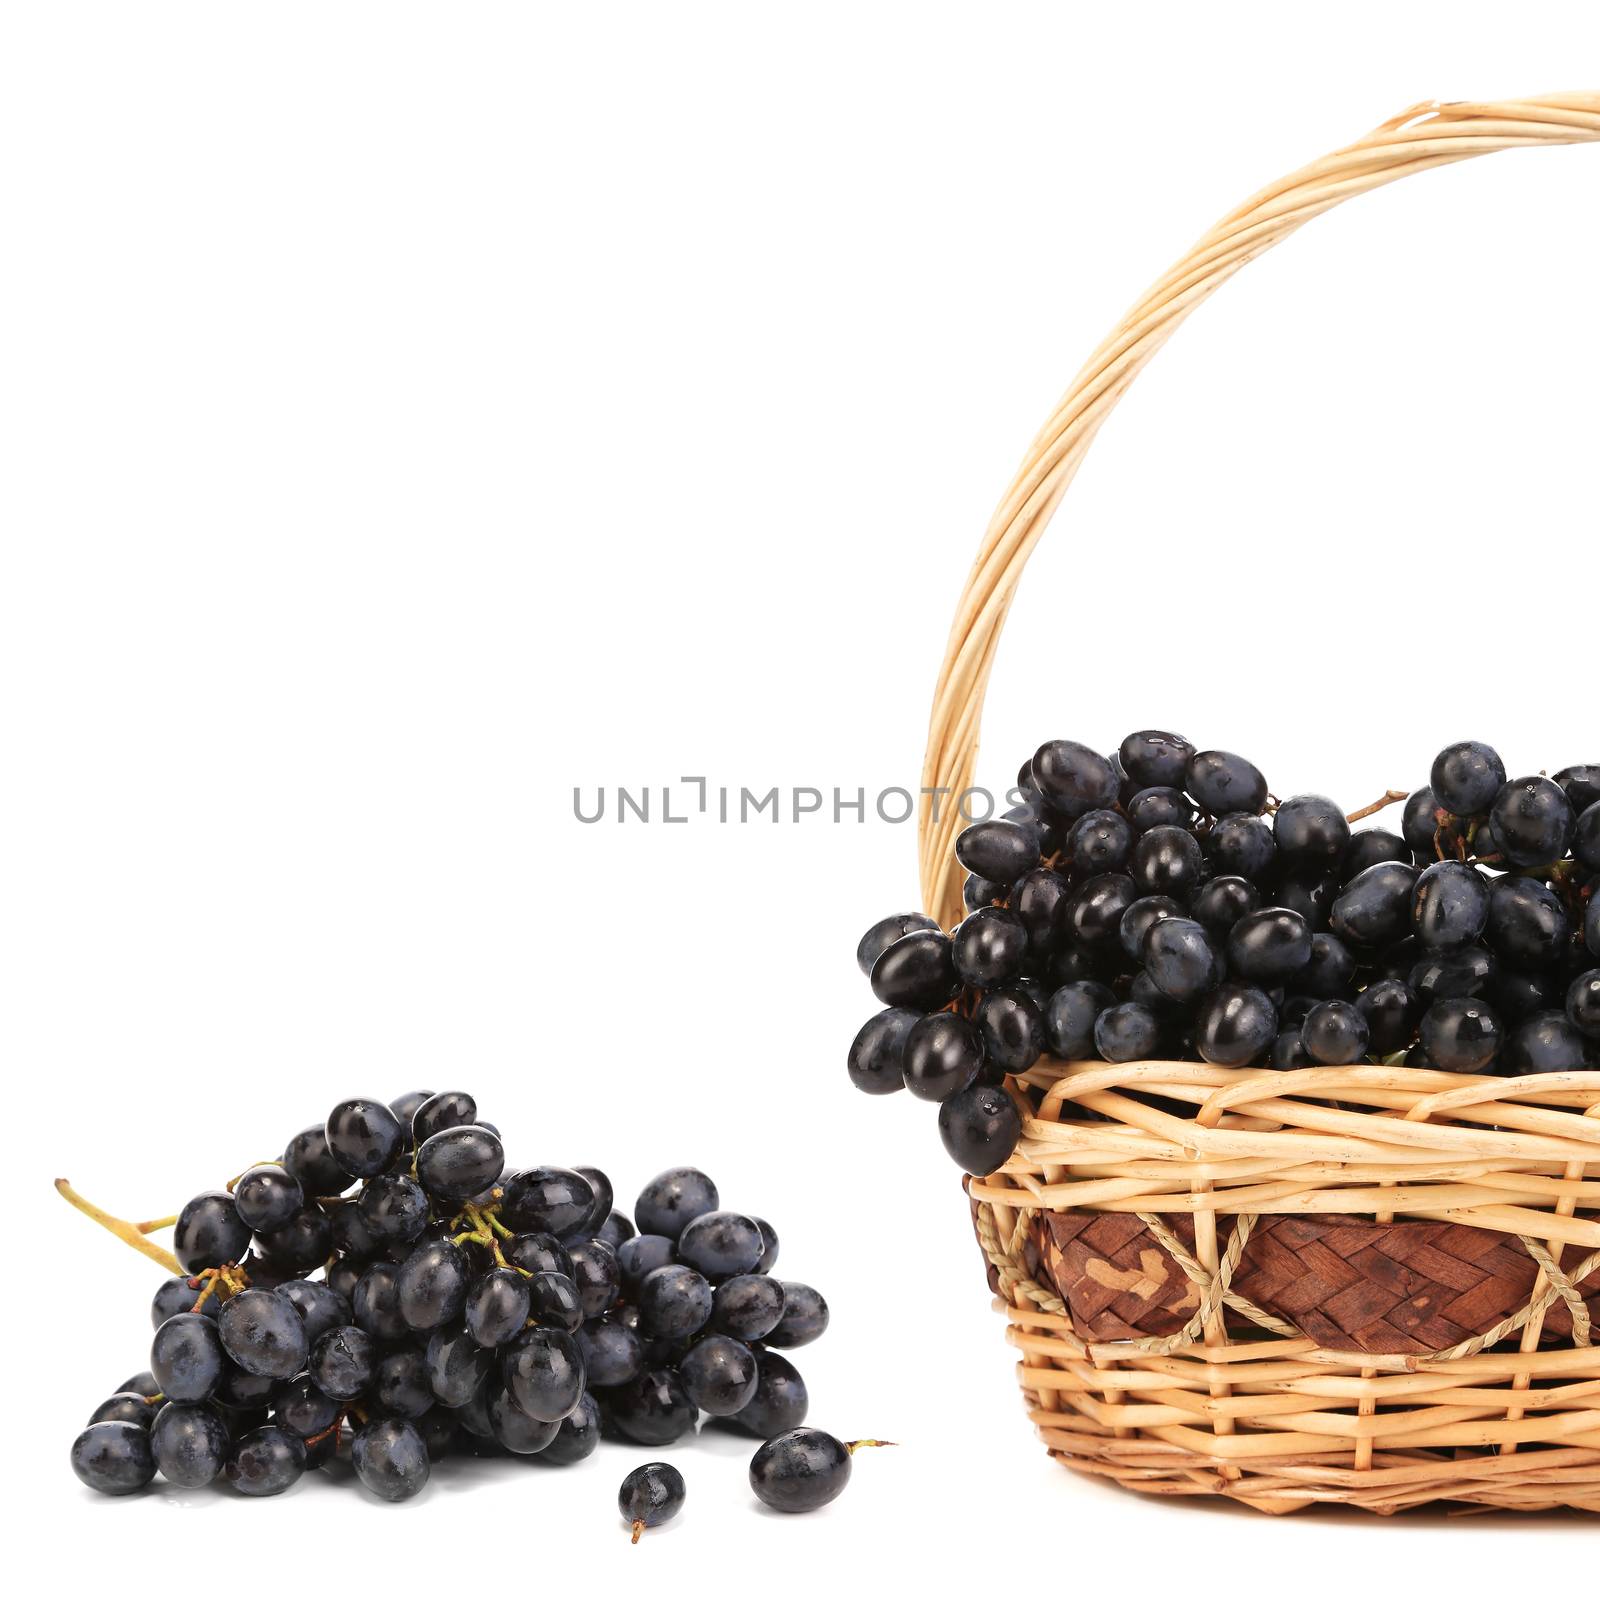 Dark grapes in a wicker basket. by indigolotos